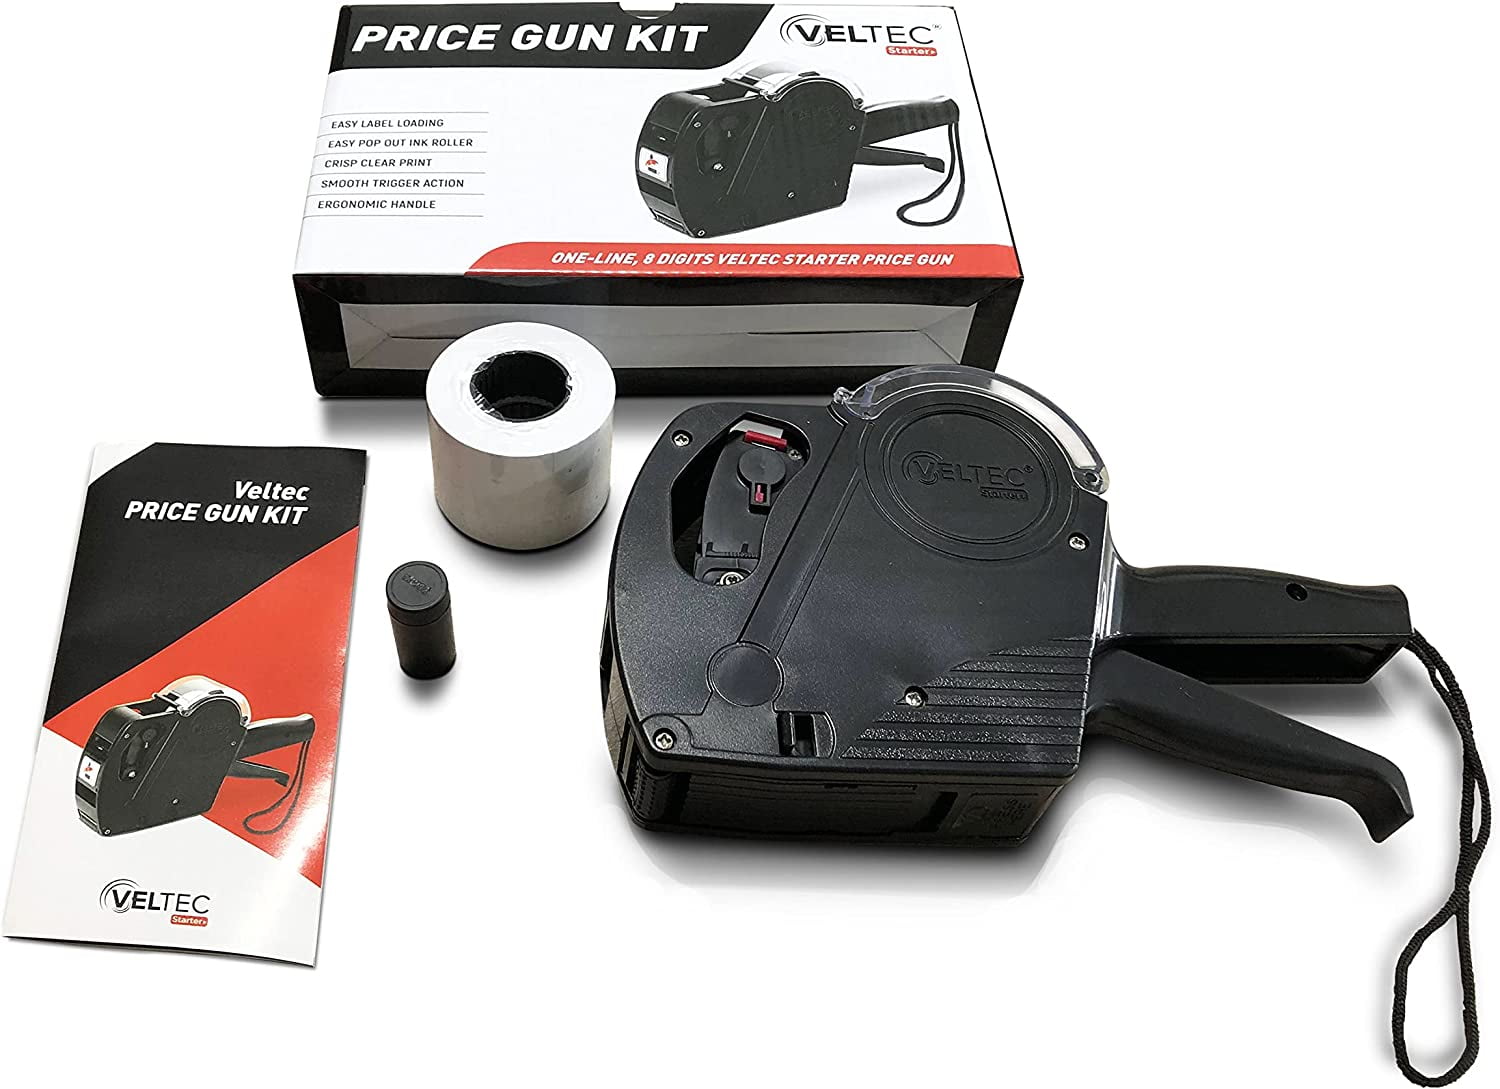 Veltec Price Gun Starter 1-Line, 8 Digits – Includes 2000 White Labels, 1 Inker and Starter Labels Preloaded, and Extra Ink Roller